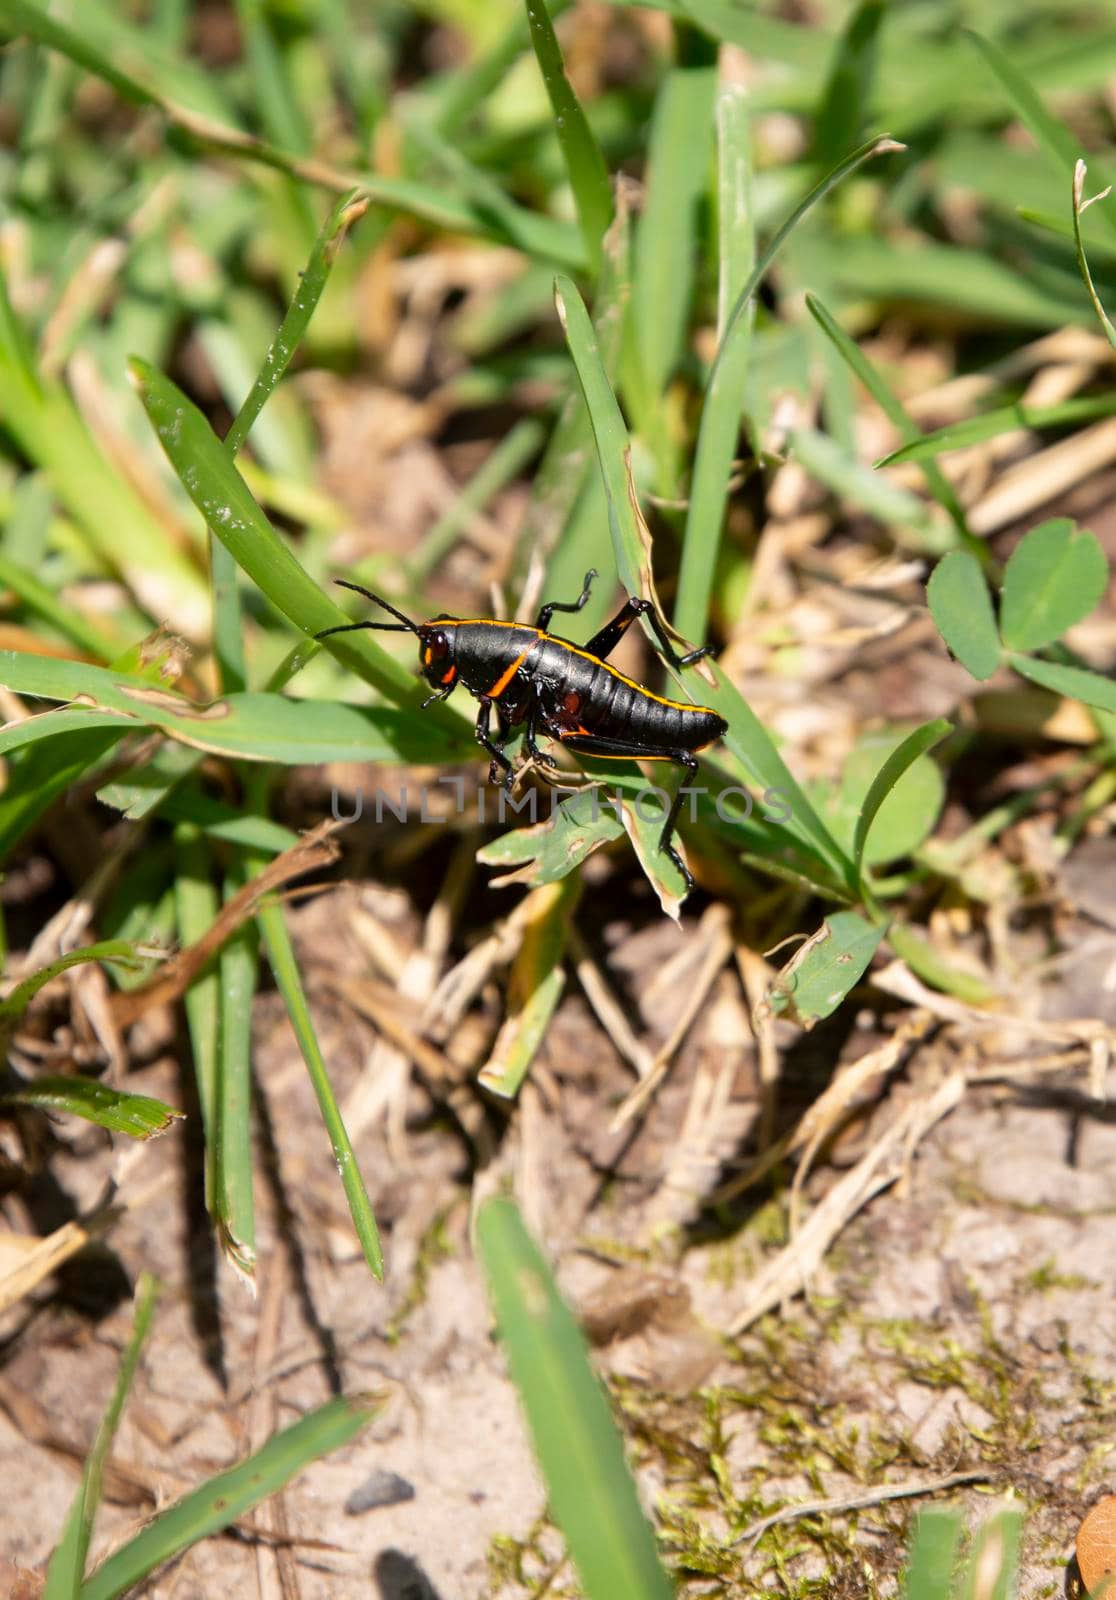 Southeastern lubber grasshopper (Romalea microptera) climbing blades of grass